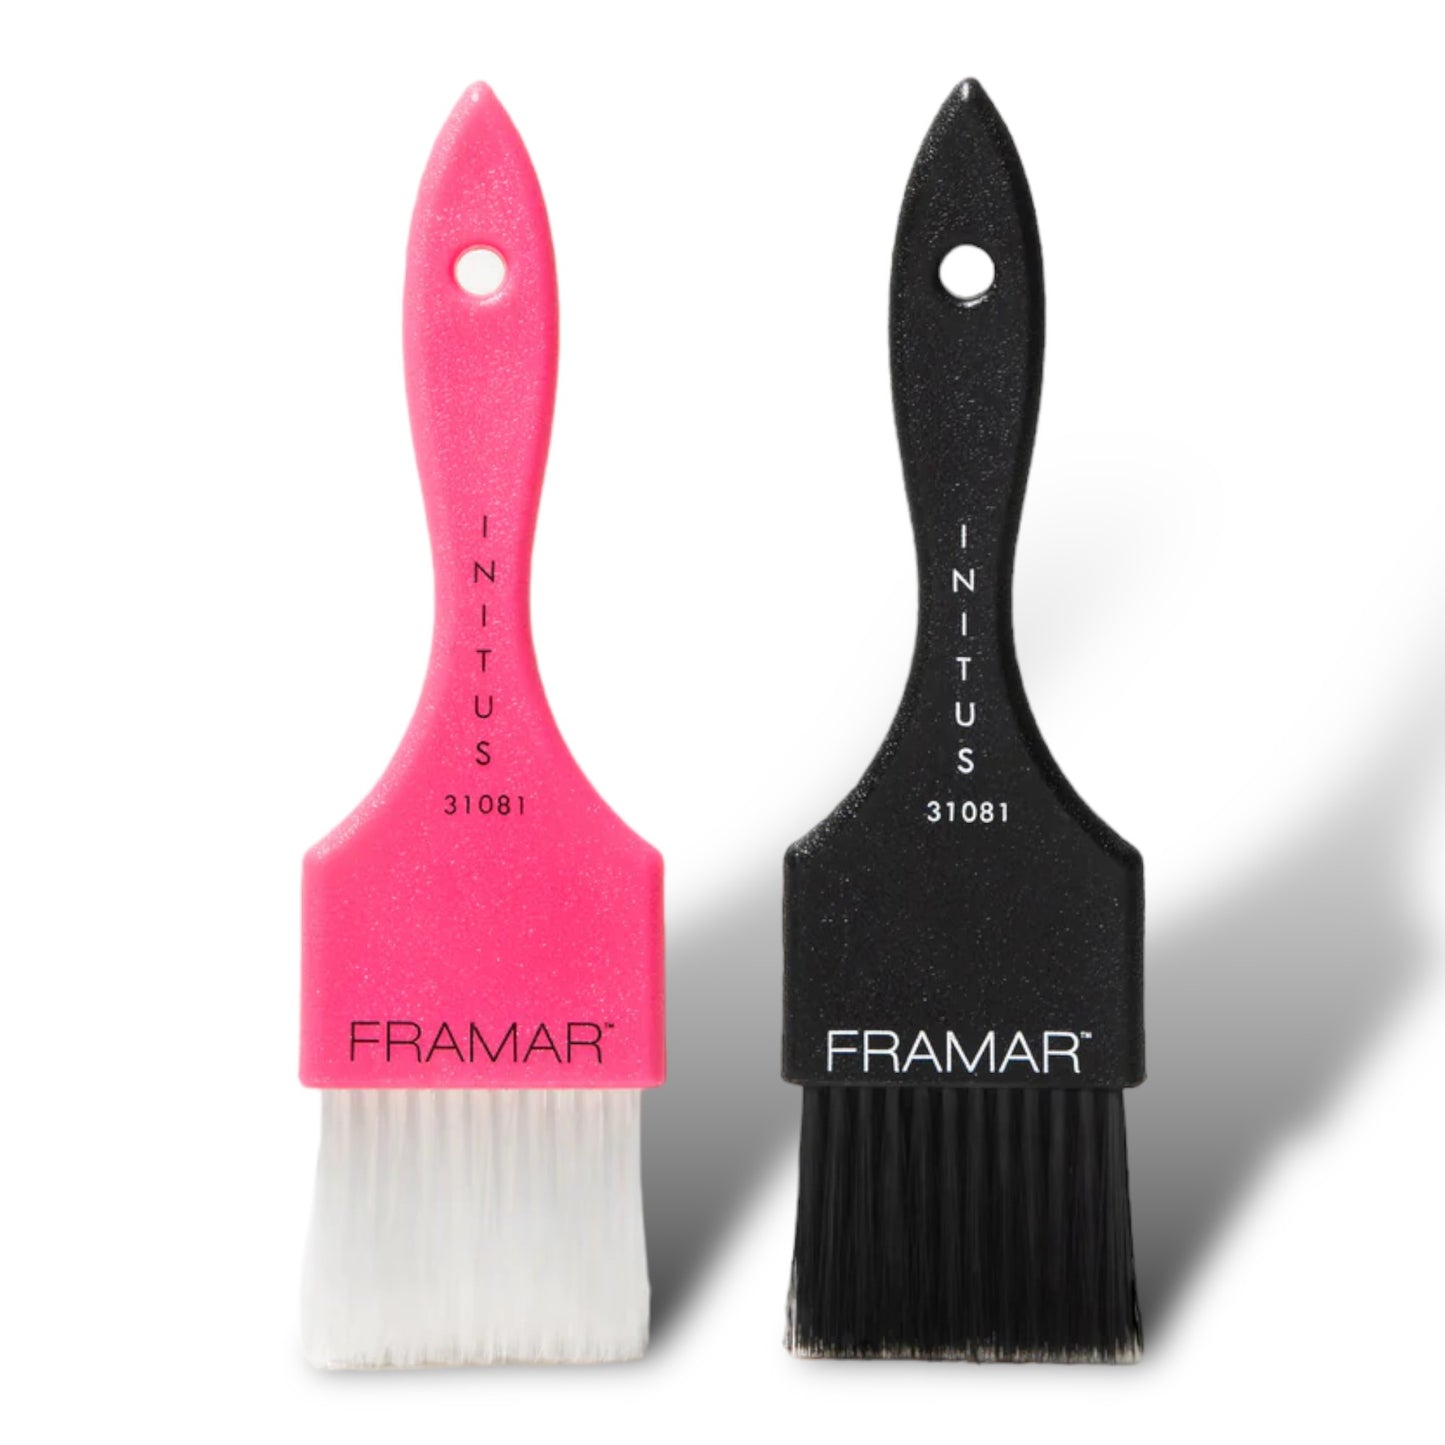 Framar Power Painter Färbepinselset Pinsel Brush 2 er Set - pink / schwarz